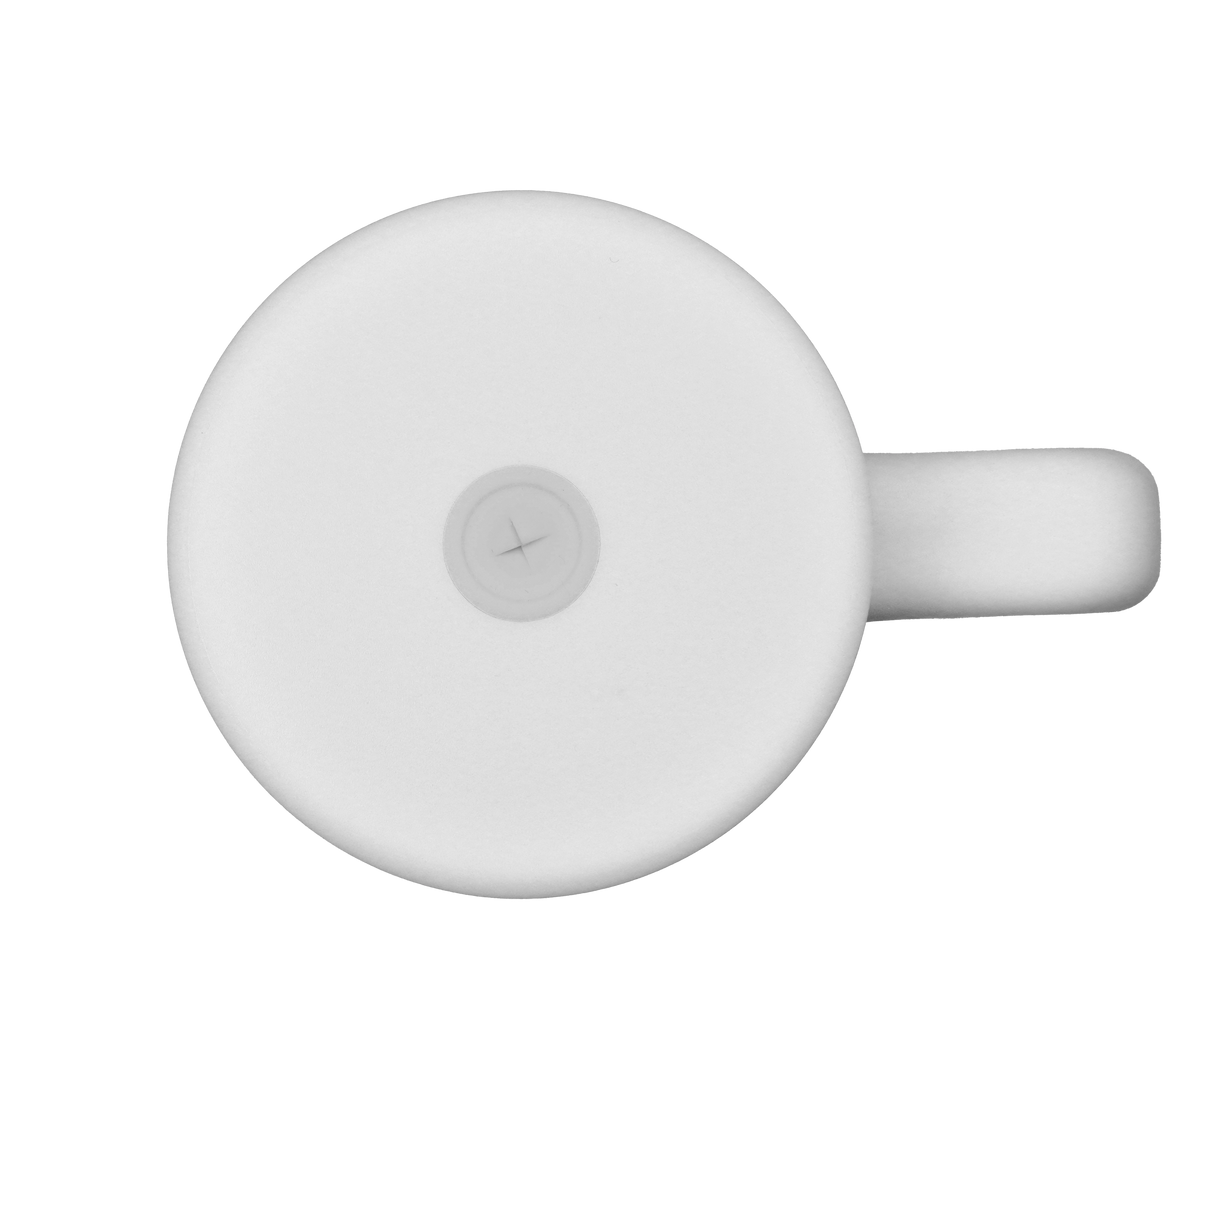 handled travel mug modern matte white